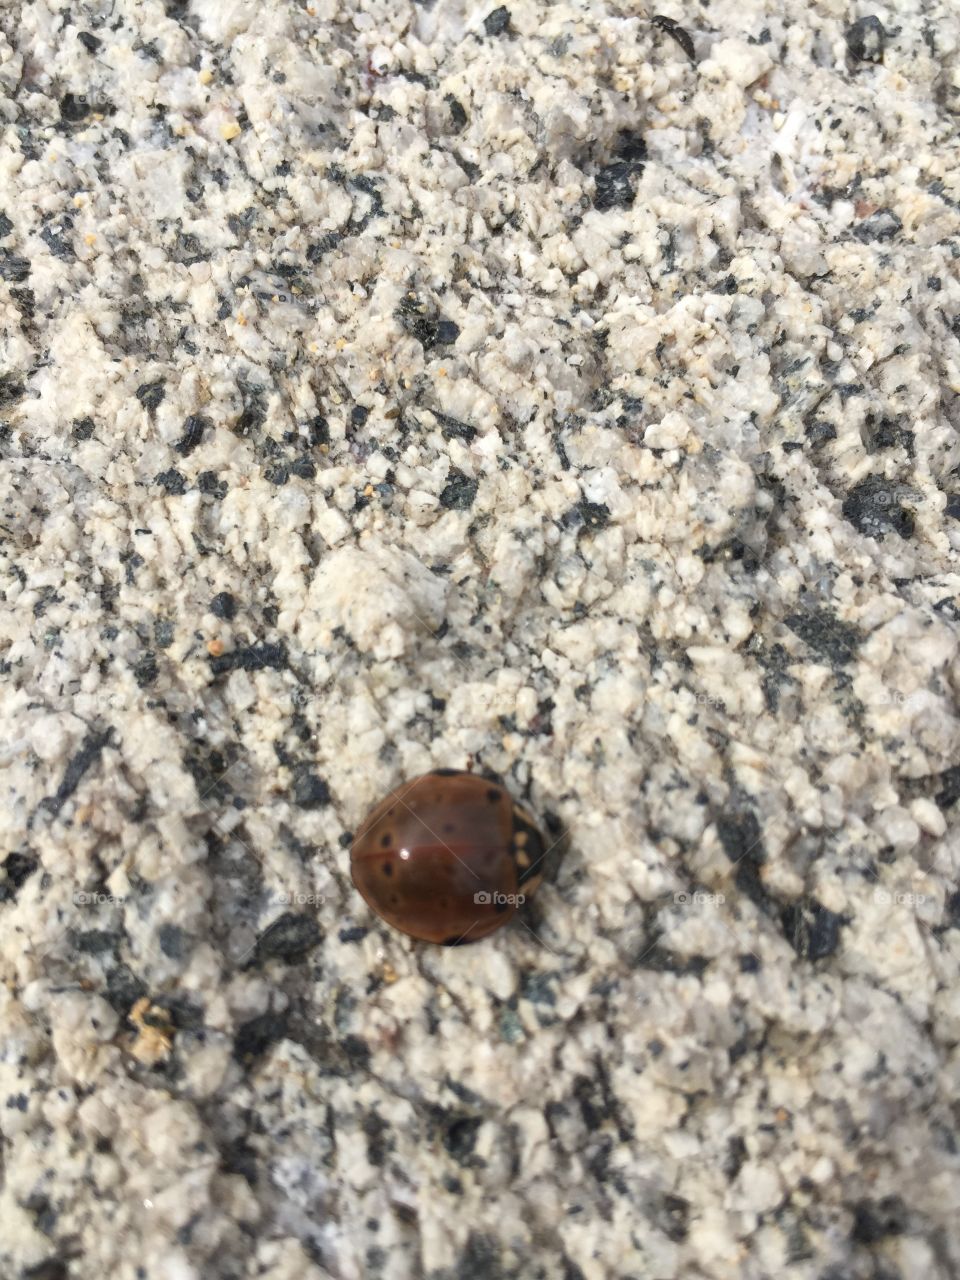 Little lady bug